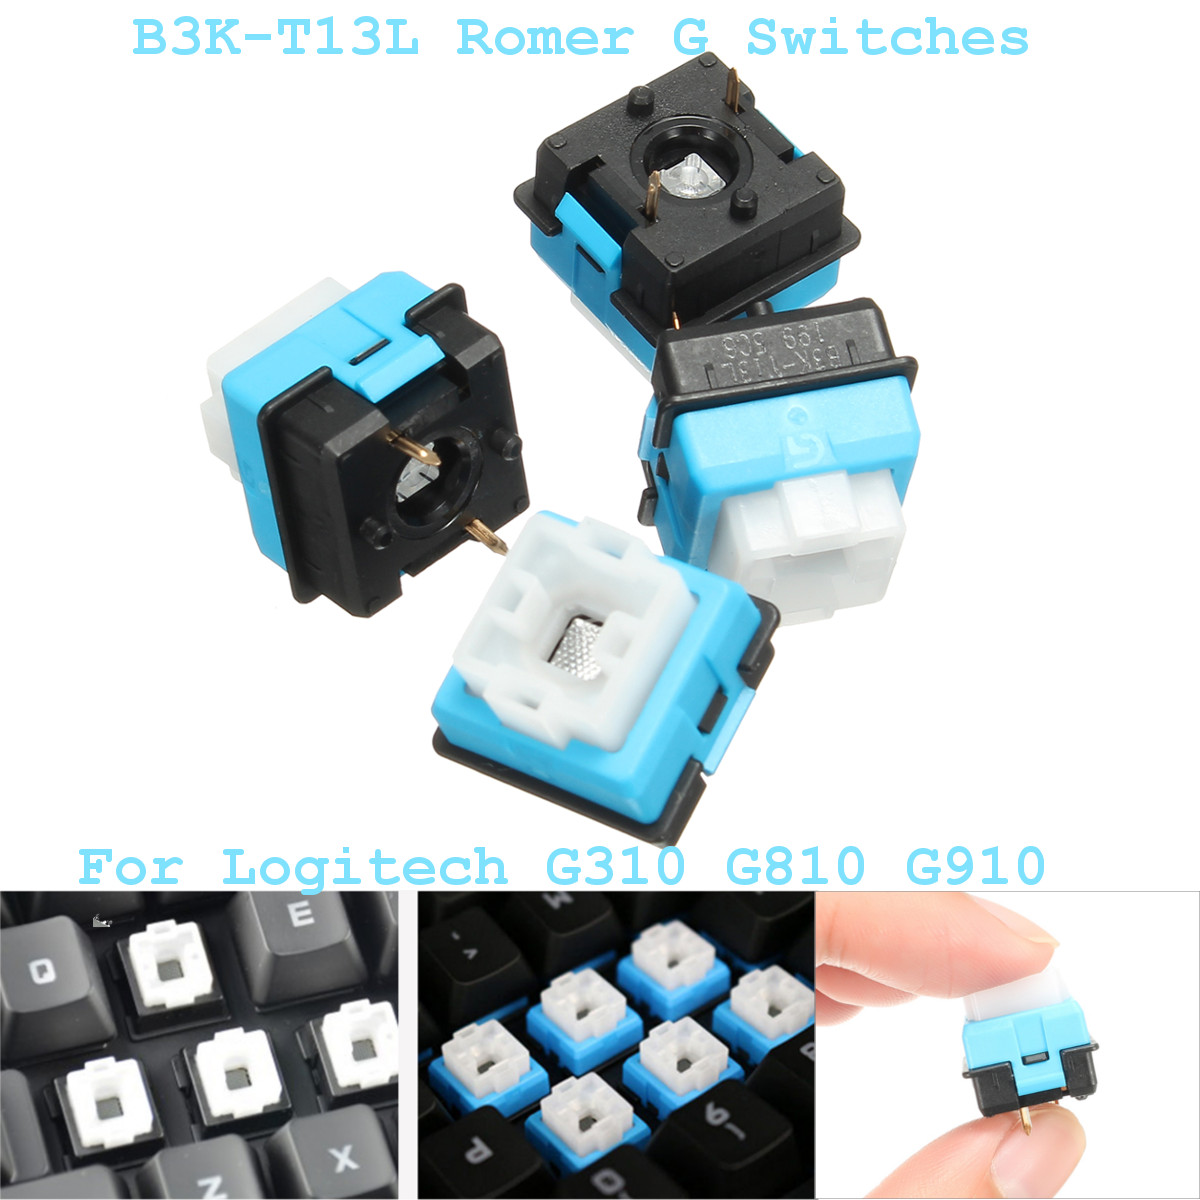 4pcs B3K-T13L Romer G Keyboard Switches for Logitech G310 G810 G910 RGB 7